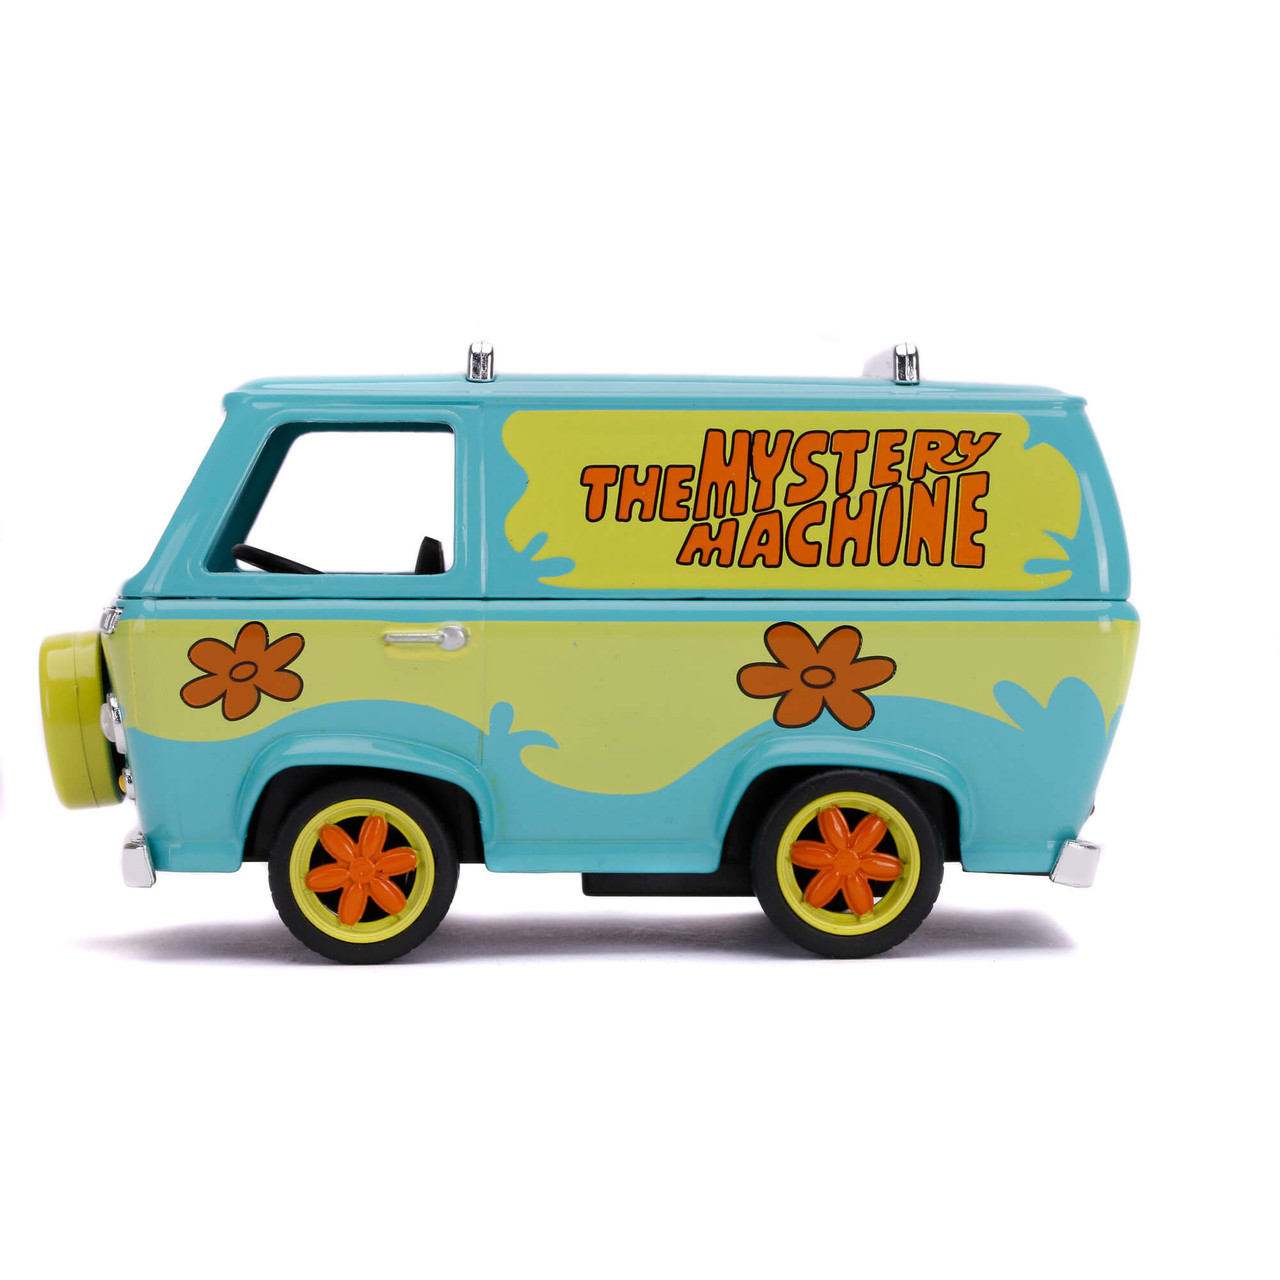 The Mystery Machine Van, Vintage Scooby Doo Toy, Mystery Machine Van Toy,  Scooby Doo Toys, Scooby Doo Toy, Scooby Doo, Mystery Machine Toy 